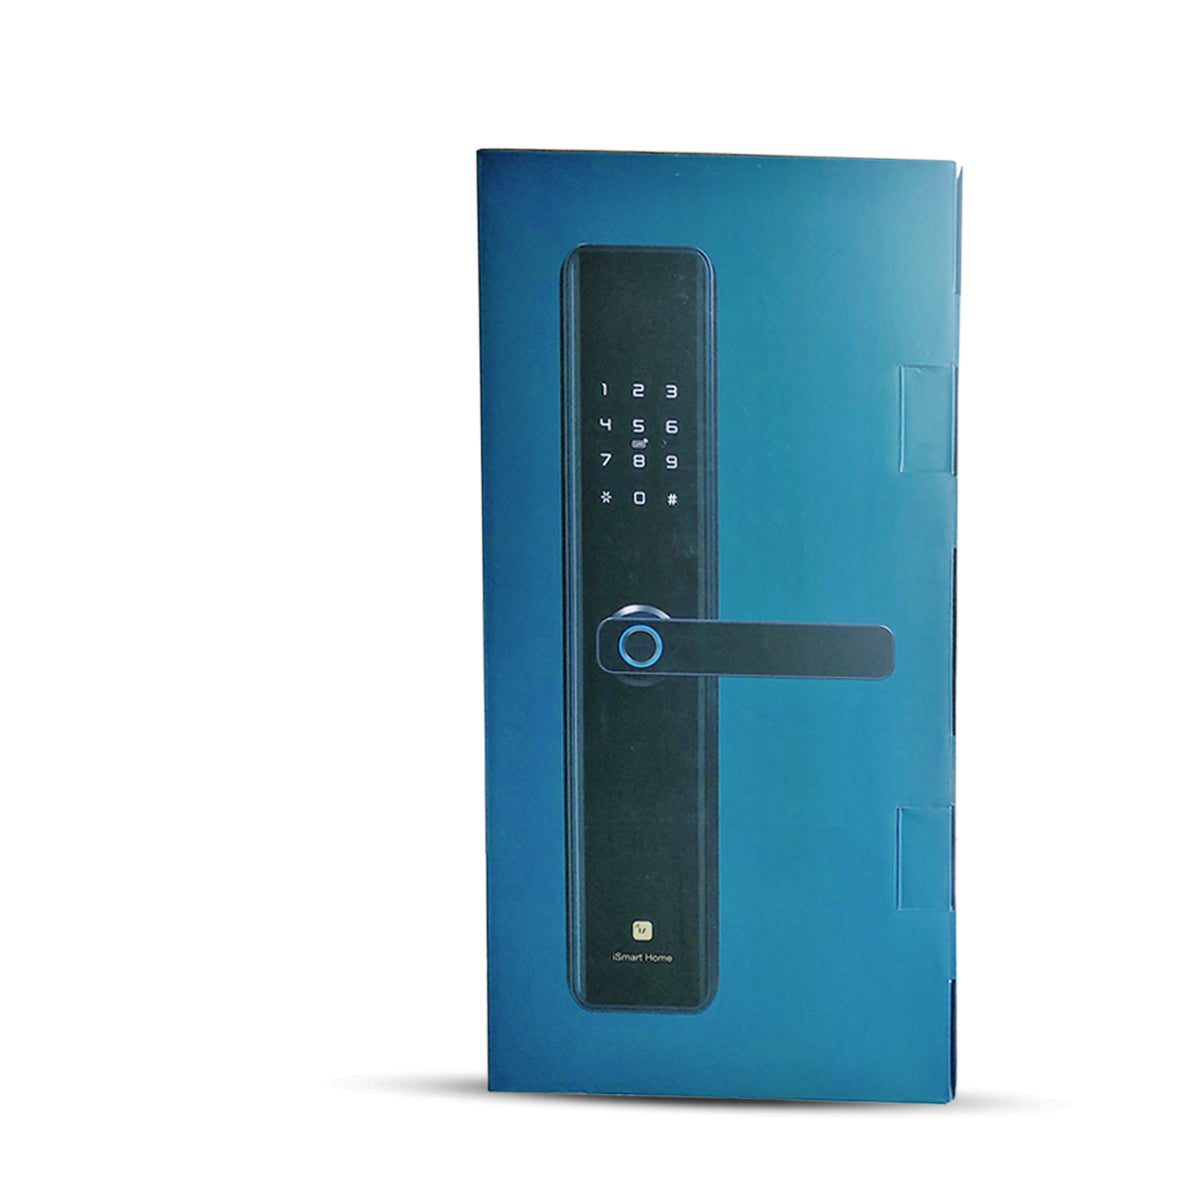 iSmart Home WiFi Smart Lock - Unlock Your Door with the Power of Technology